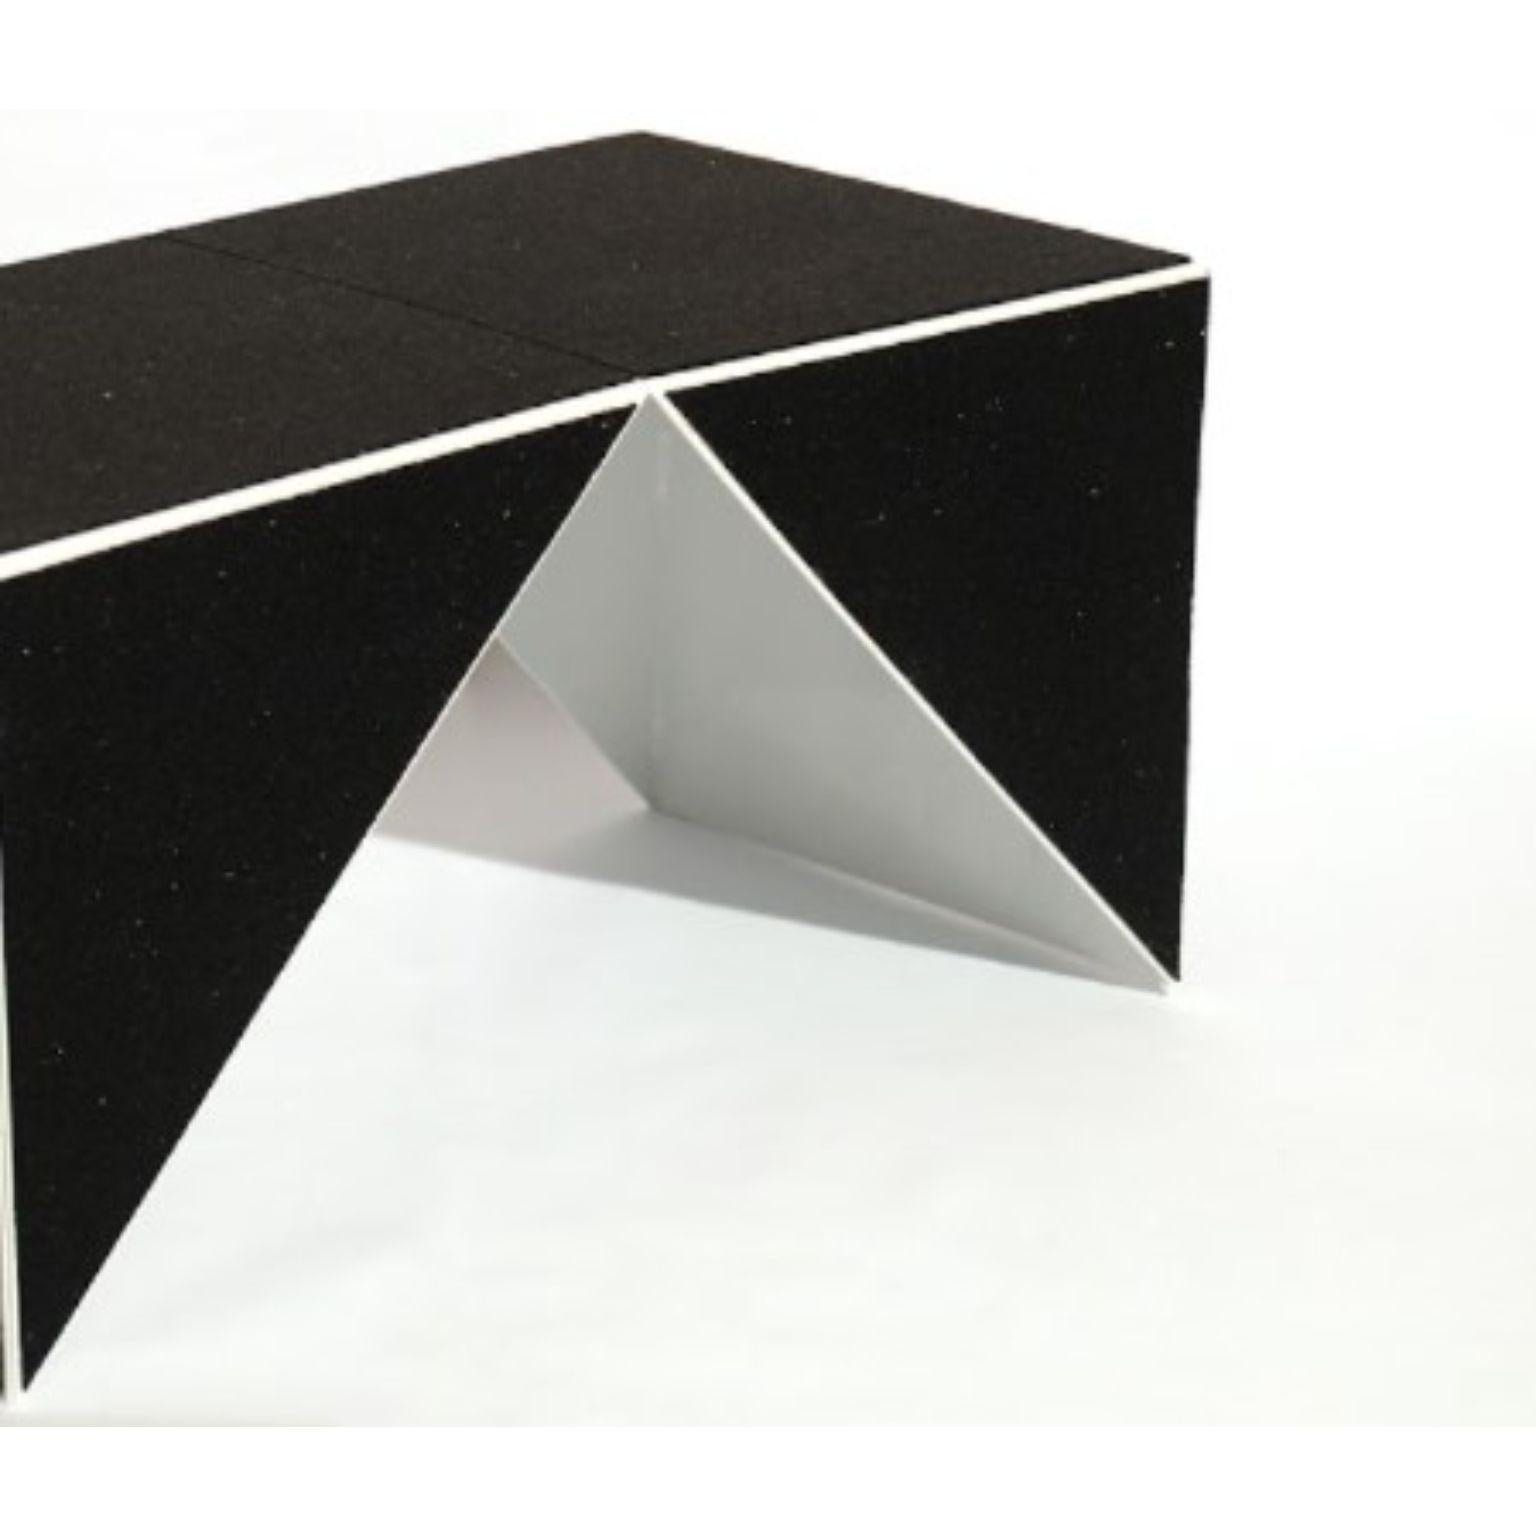 Brazilian Casulo Cube #3 by Mameluca For Sale